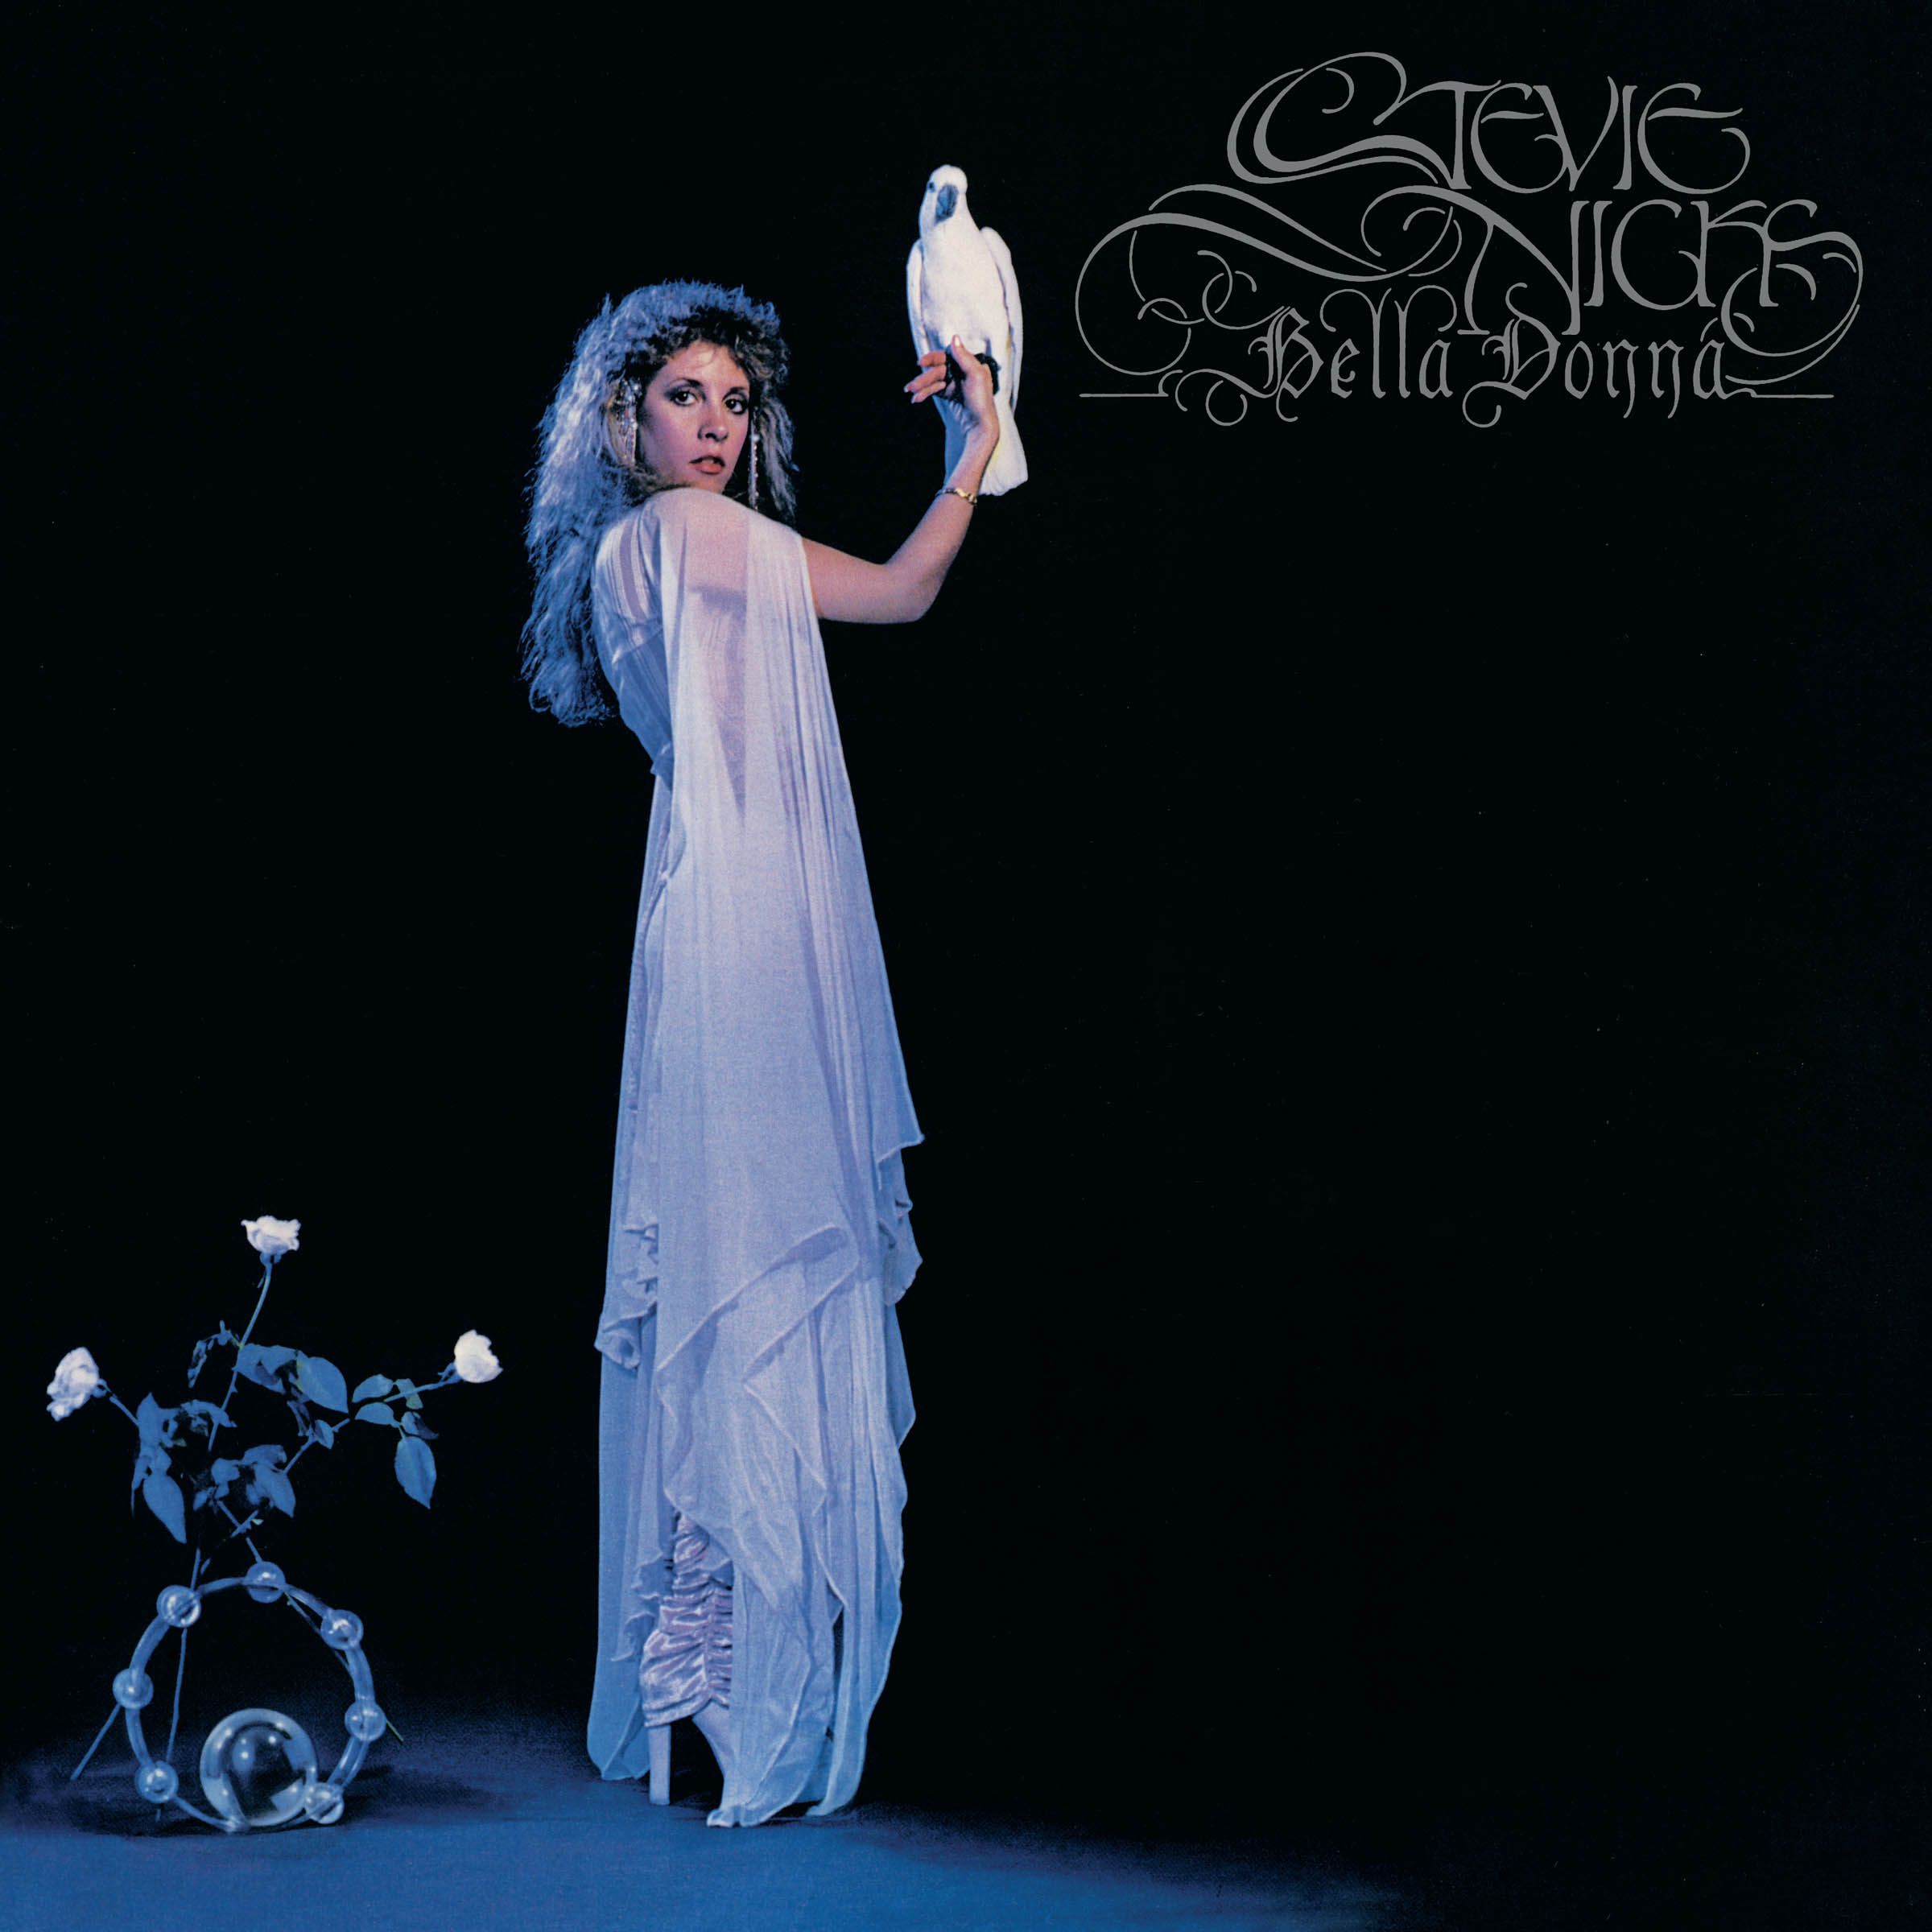 Stevie Nicks - Bella Donna {Deluxe Edition} (1981/2016) [HDTracks FLAC 24bit/96kHz]